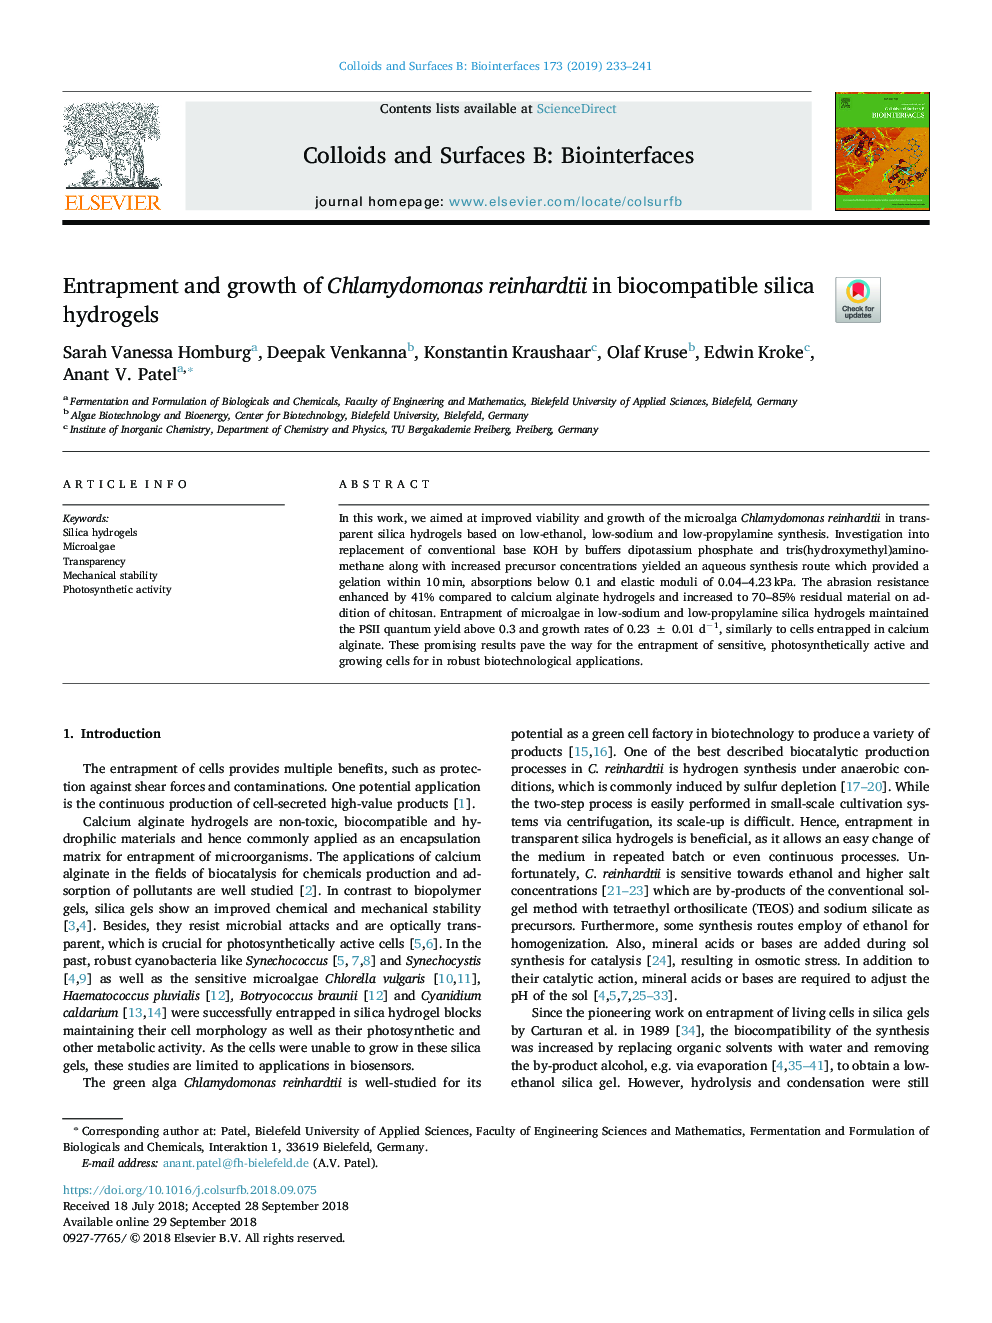 Entrapment and growth of Chlamydomonas reinhardtii in biocompatible silica hydrogels